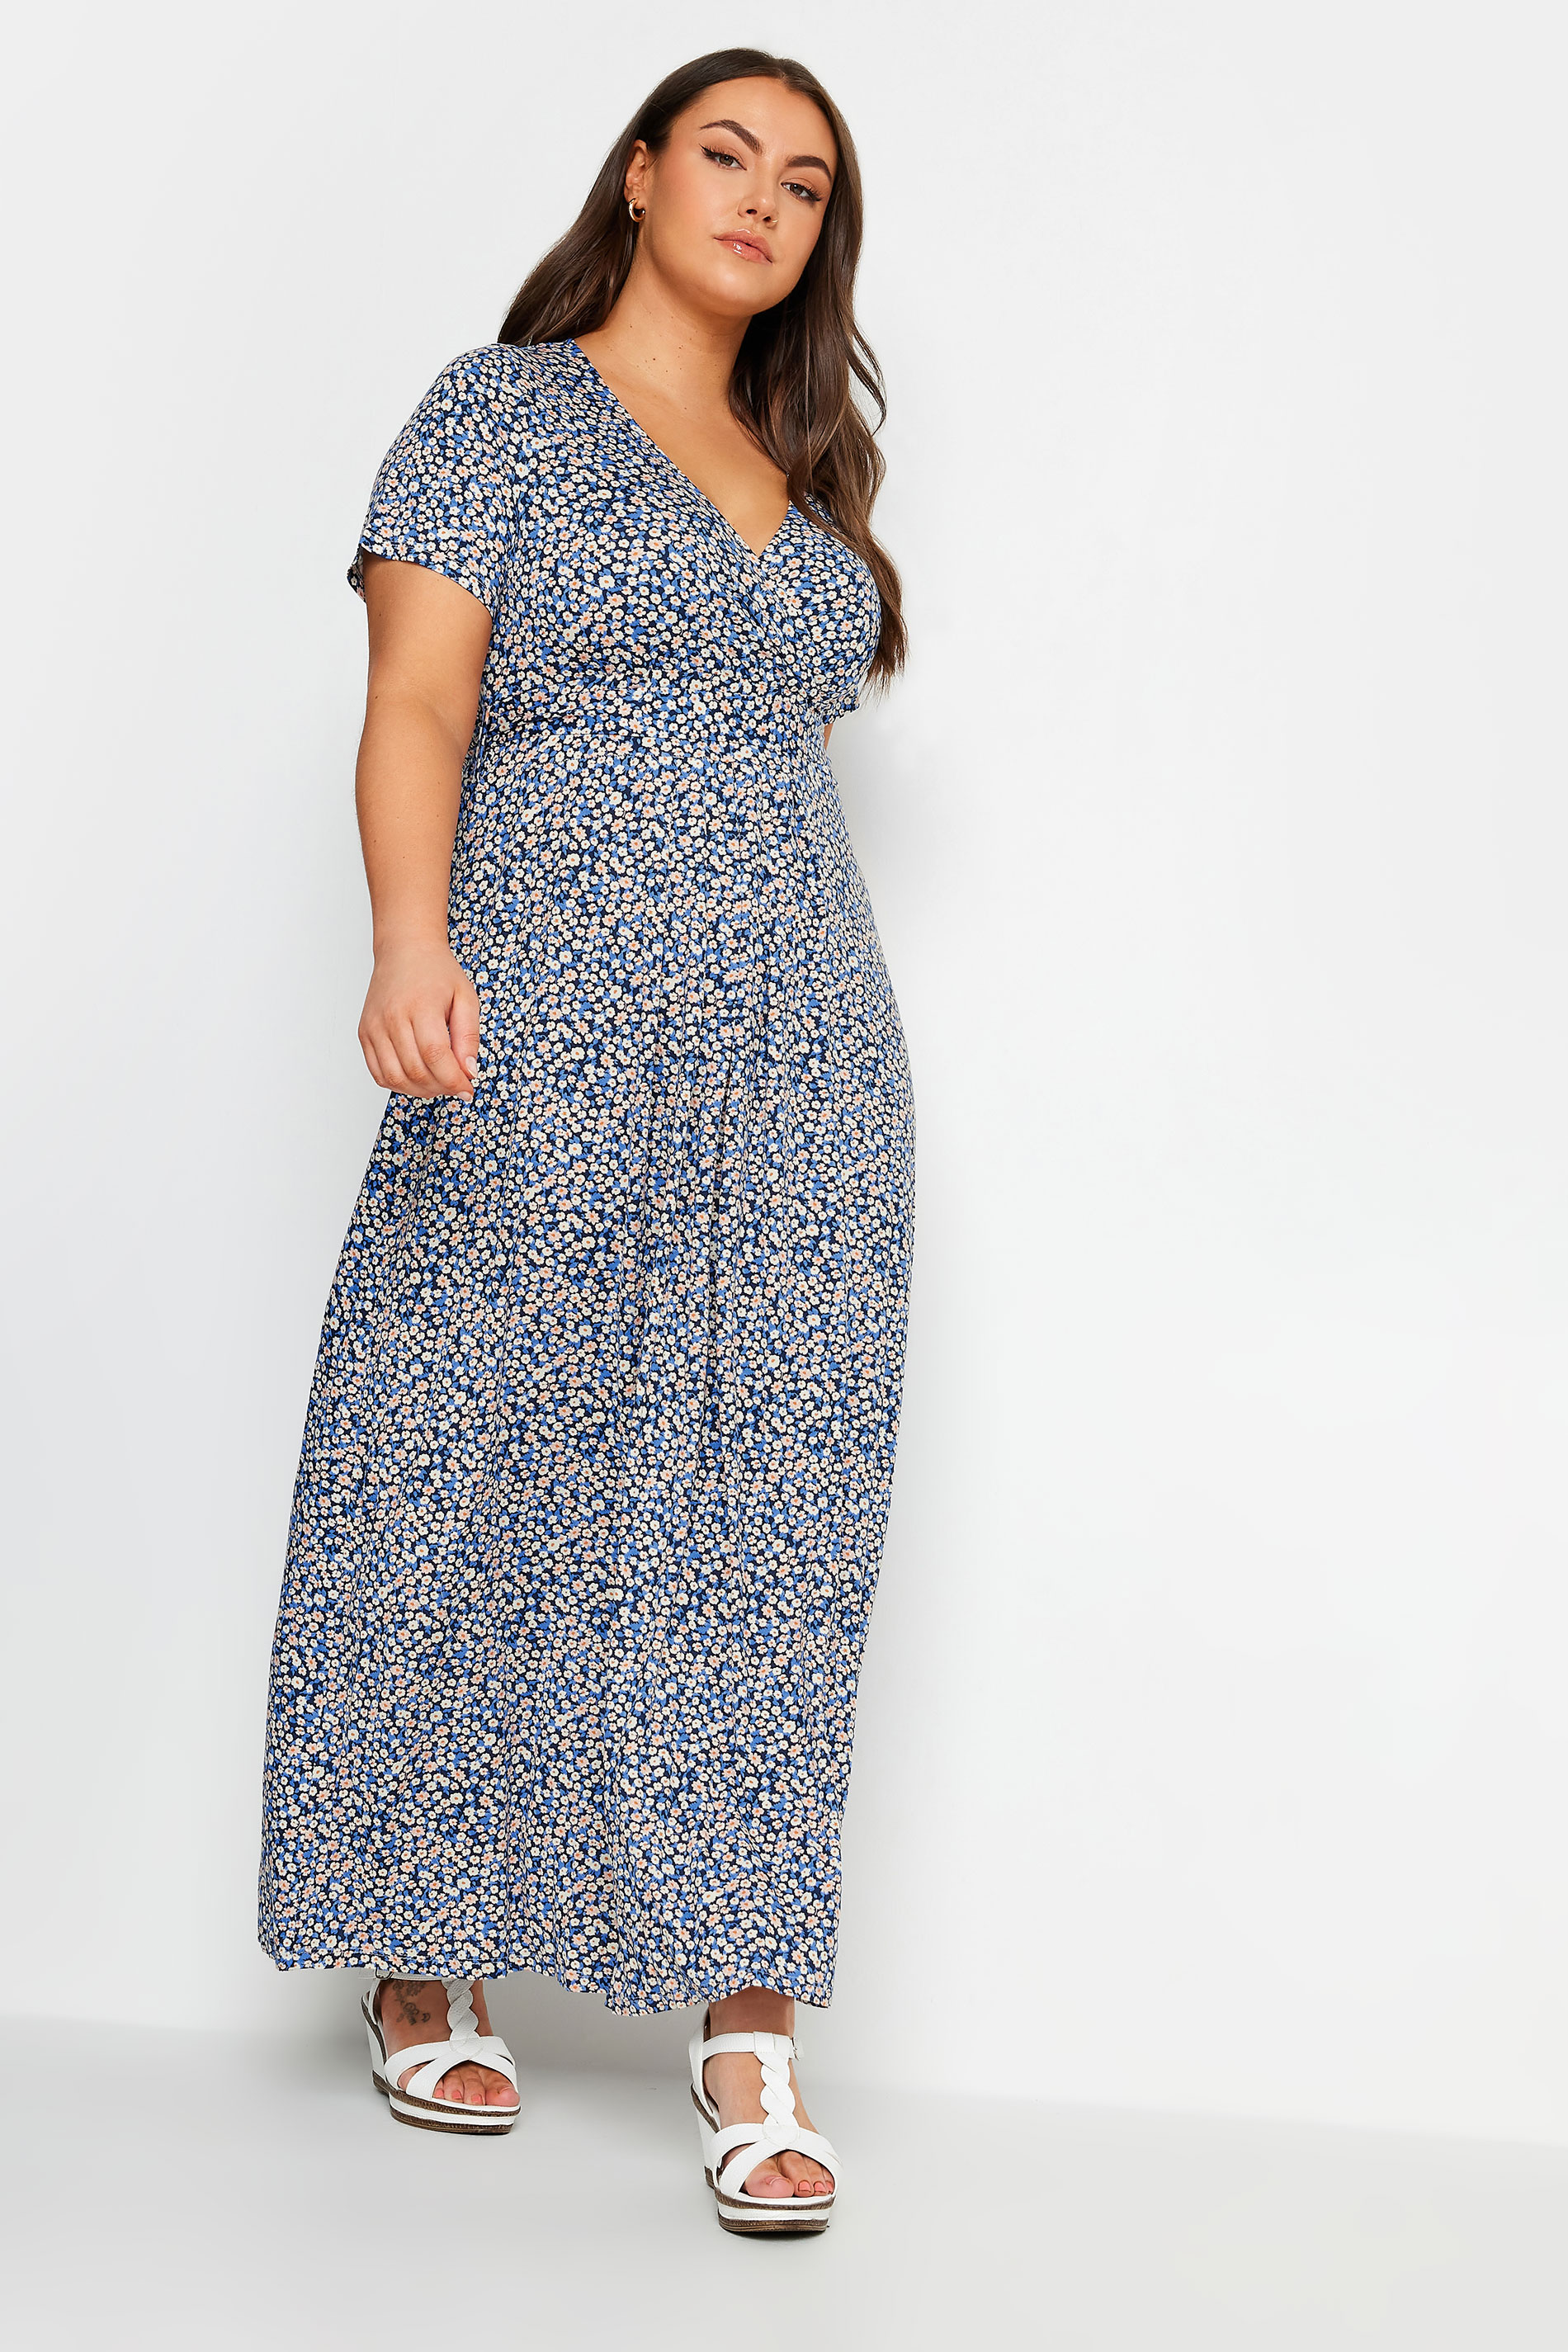 YOURS Plus Size Blue Floral Maxi Wrap Dress | Ypurs Clothing 1